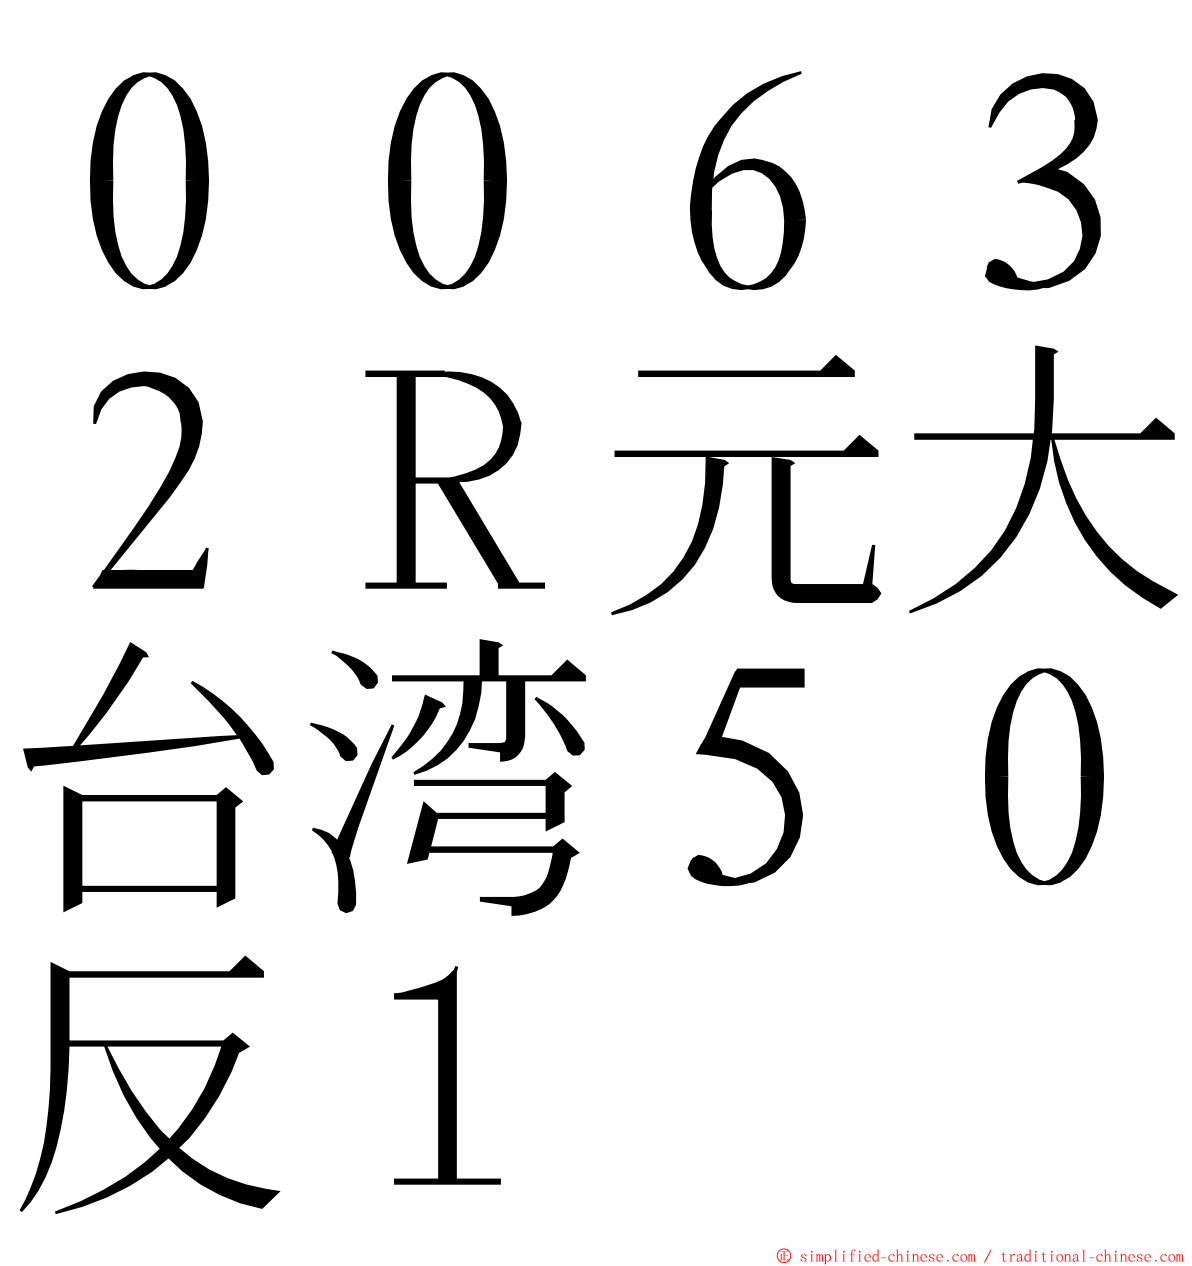 ００６３２Ｒ元大台湾５０反１ ming font